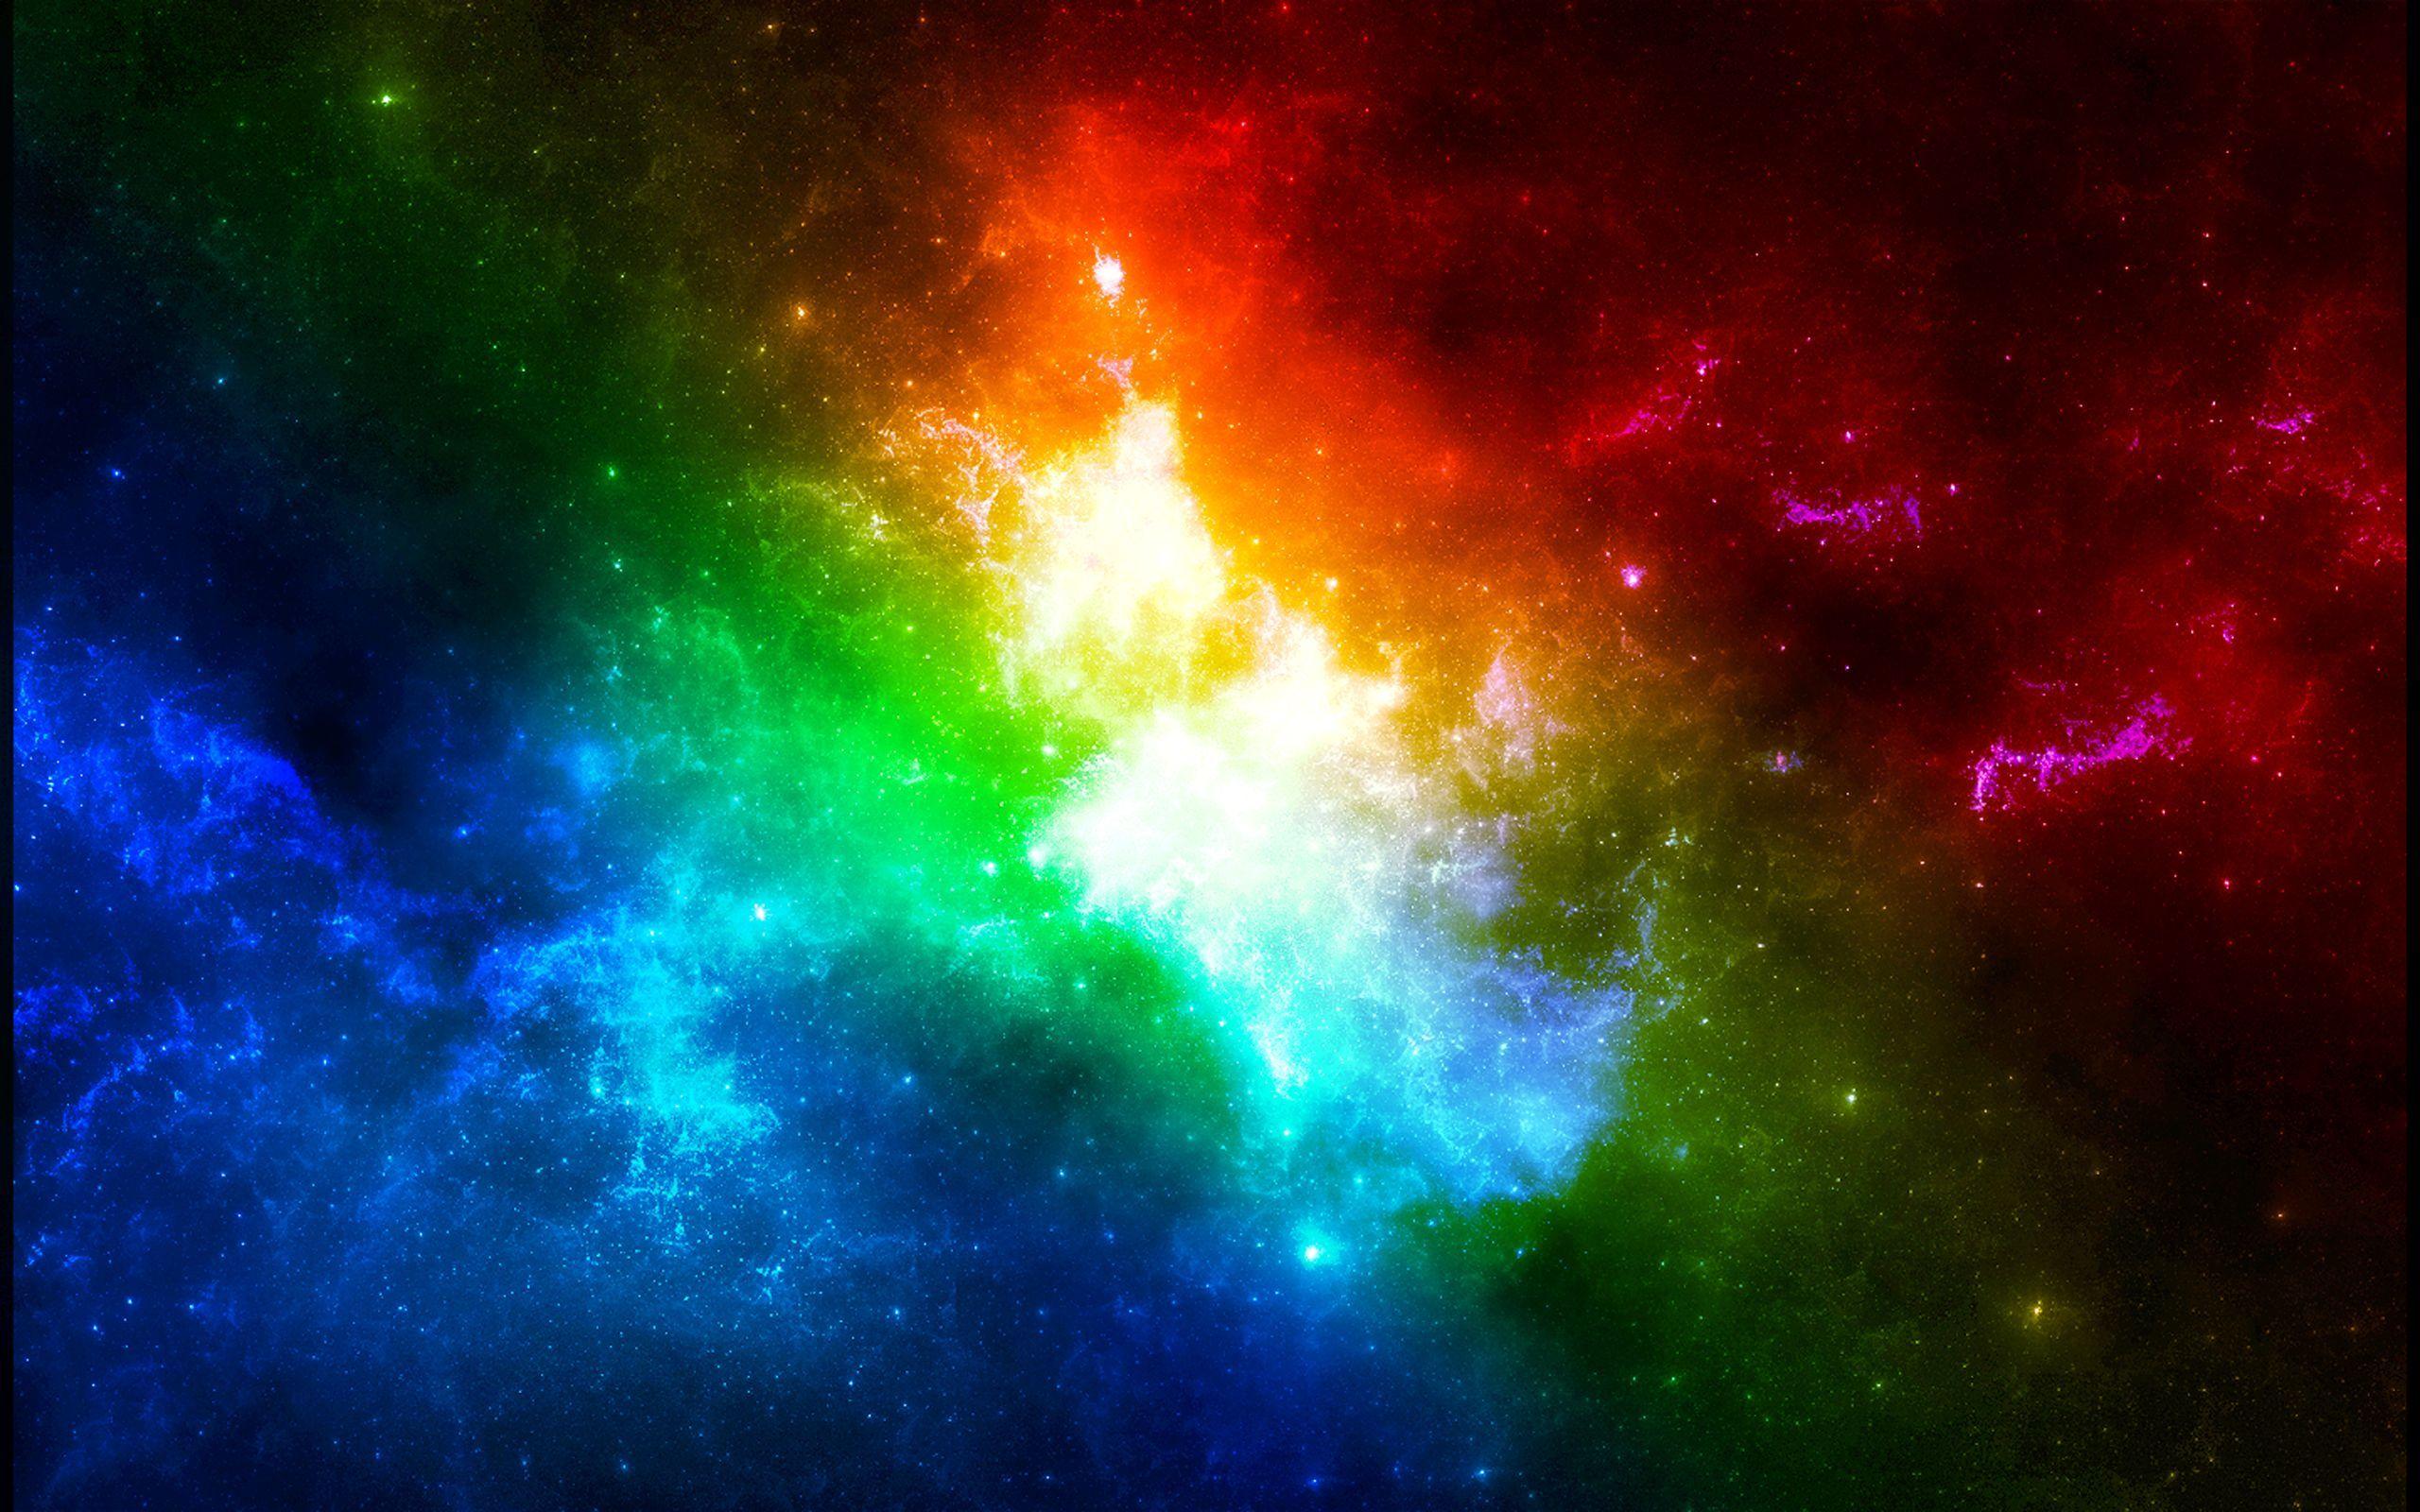 Colorful Galaxy Wallpaper Full HD. Tools. Galaxy wallpaper, HD